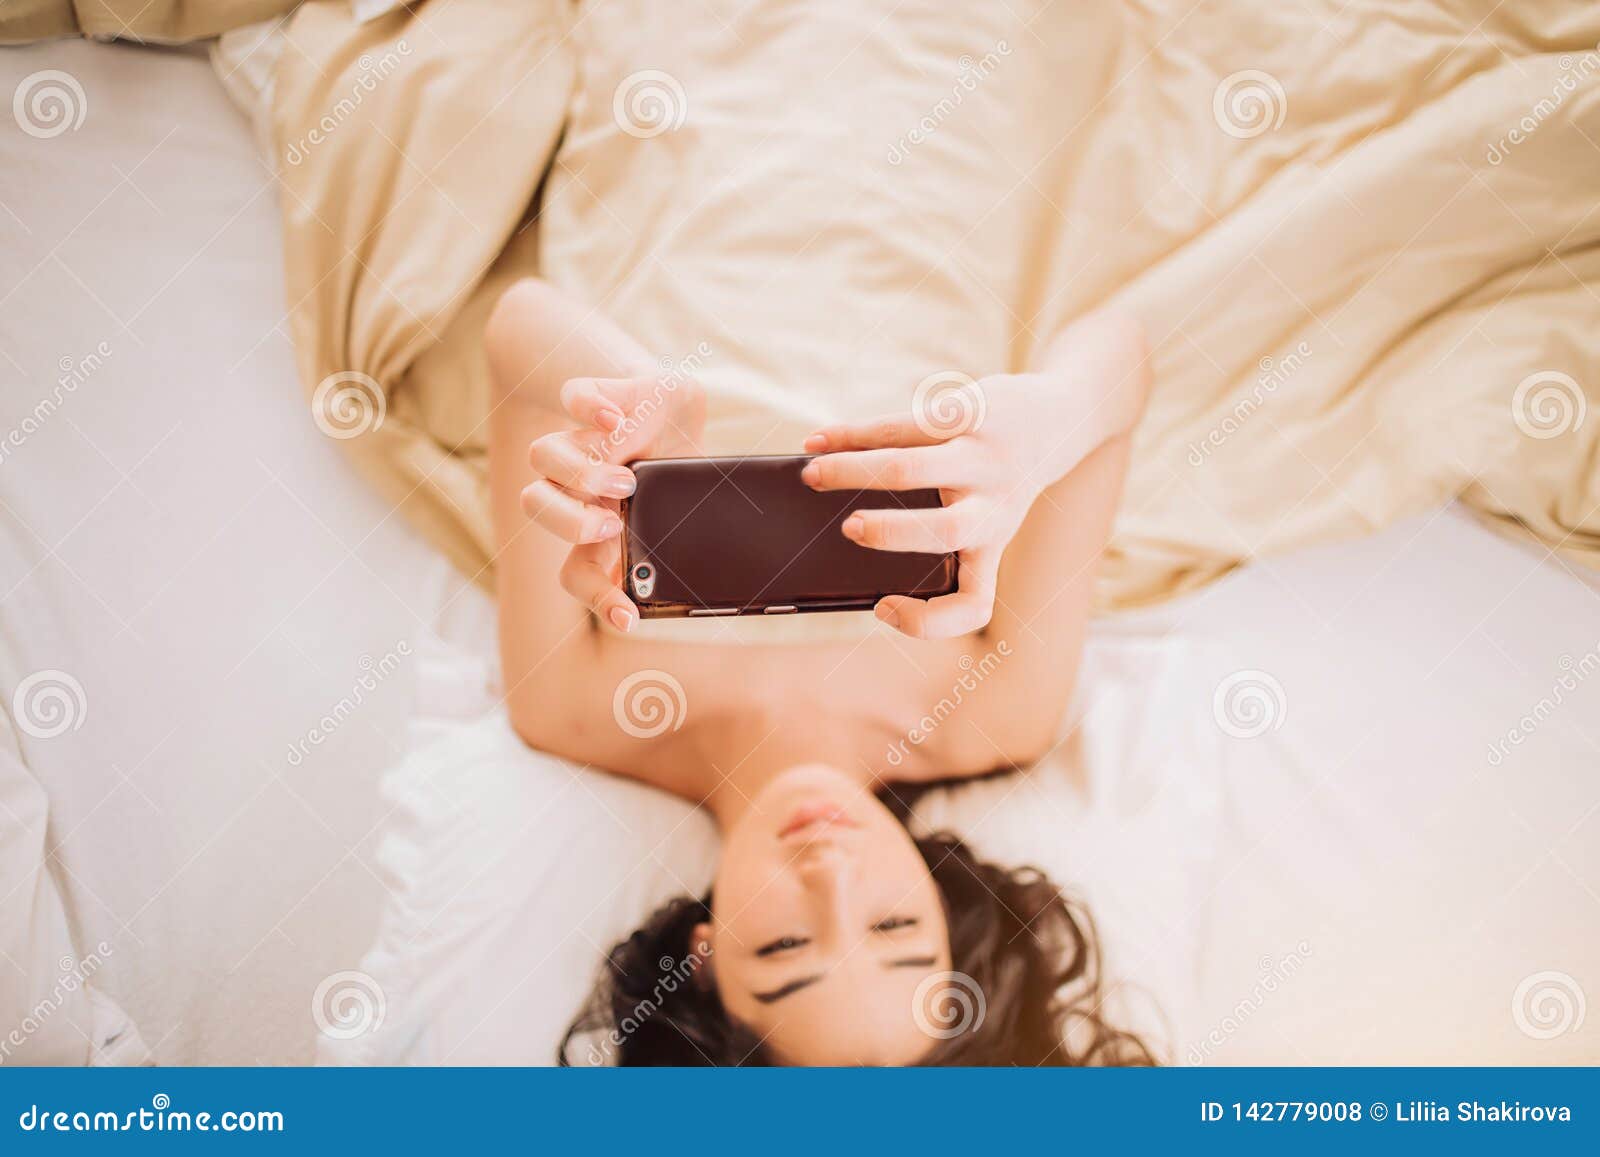 women naked in bed selfie